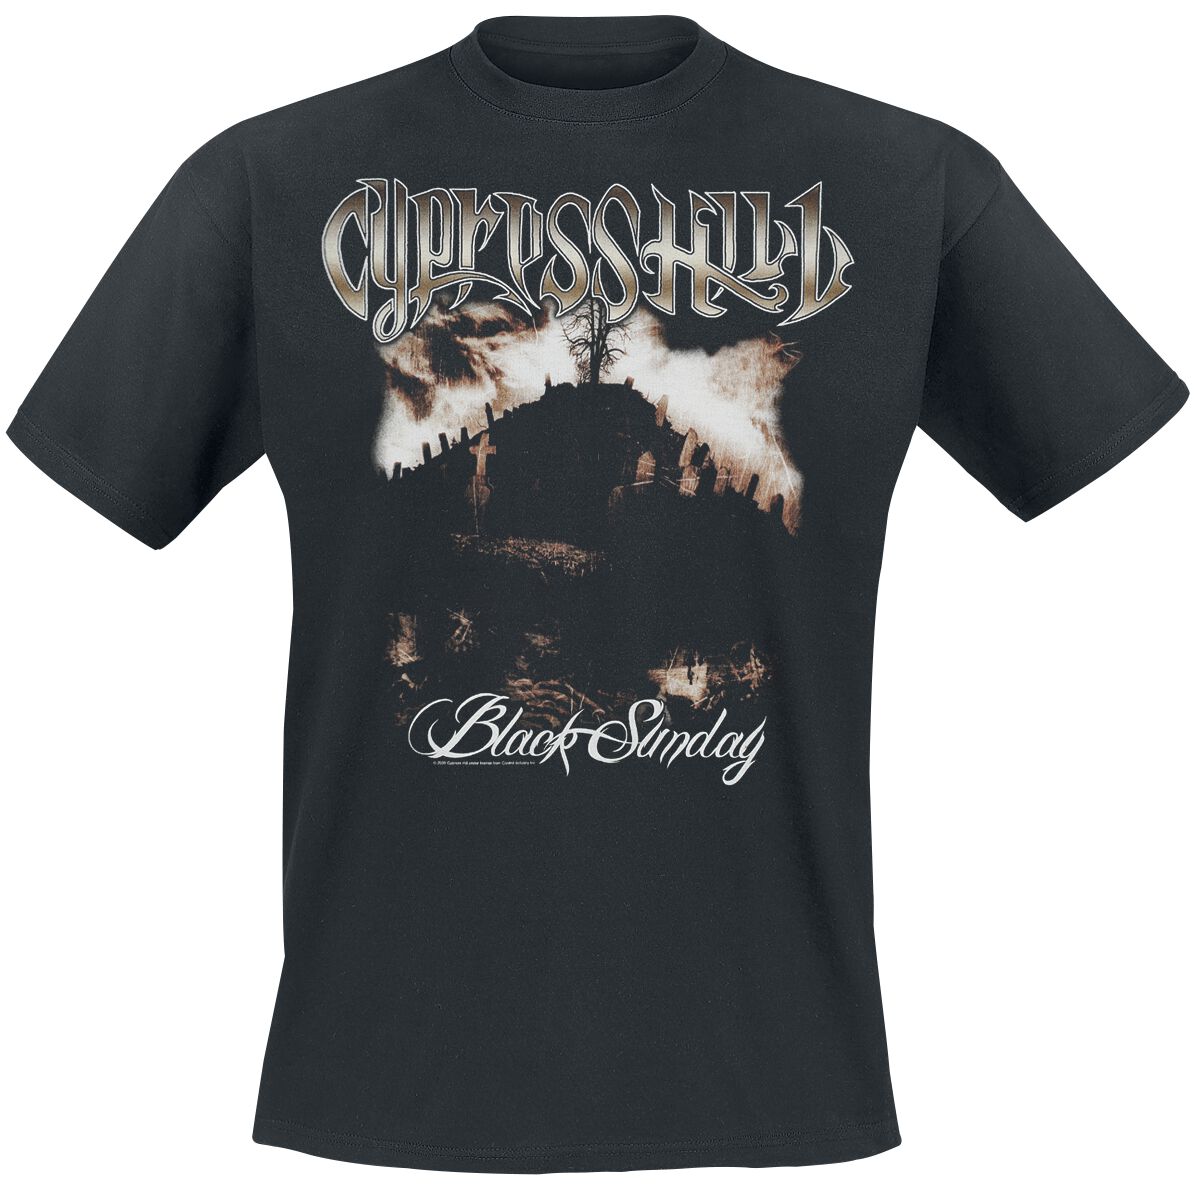 Image of Cypress Hill Black Sunday T-Shirt schwarz